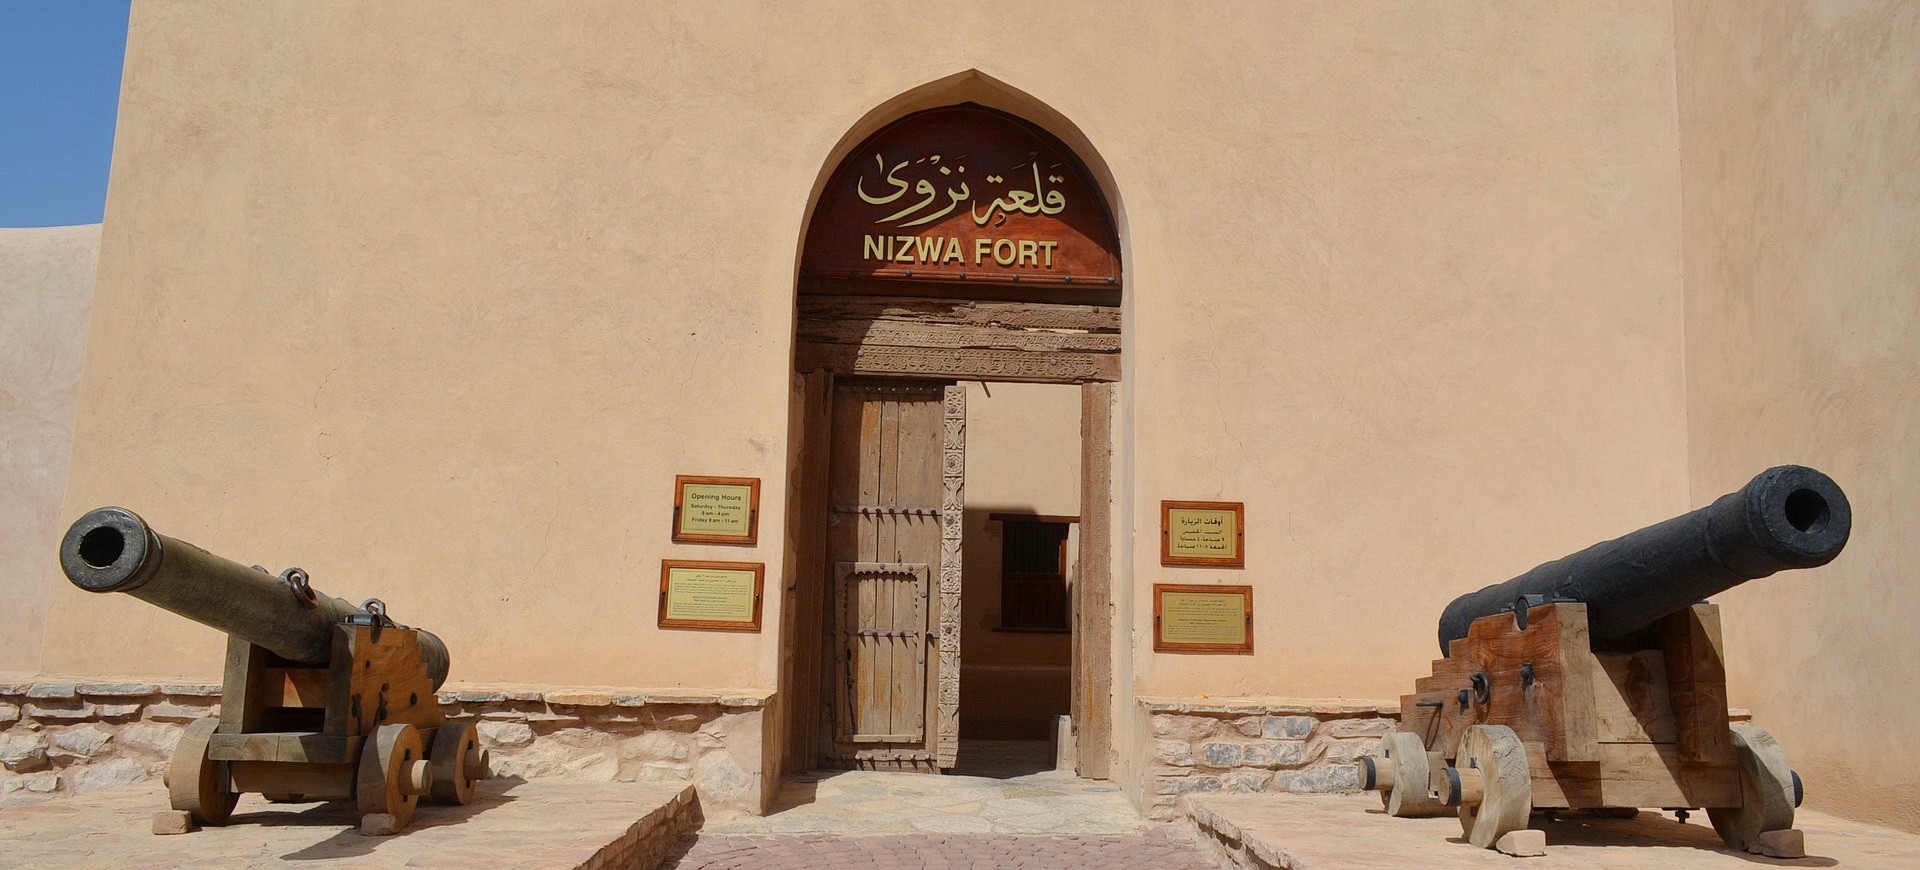 Oman Nizwa Fort Entrée by ZB